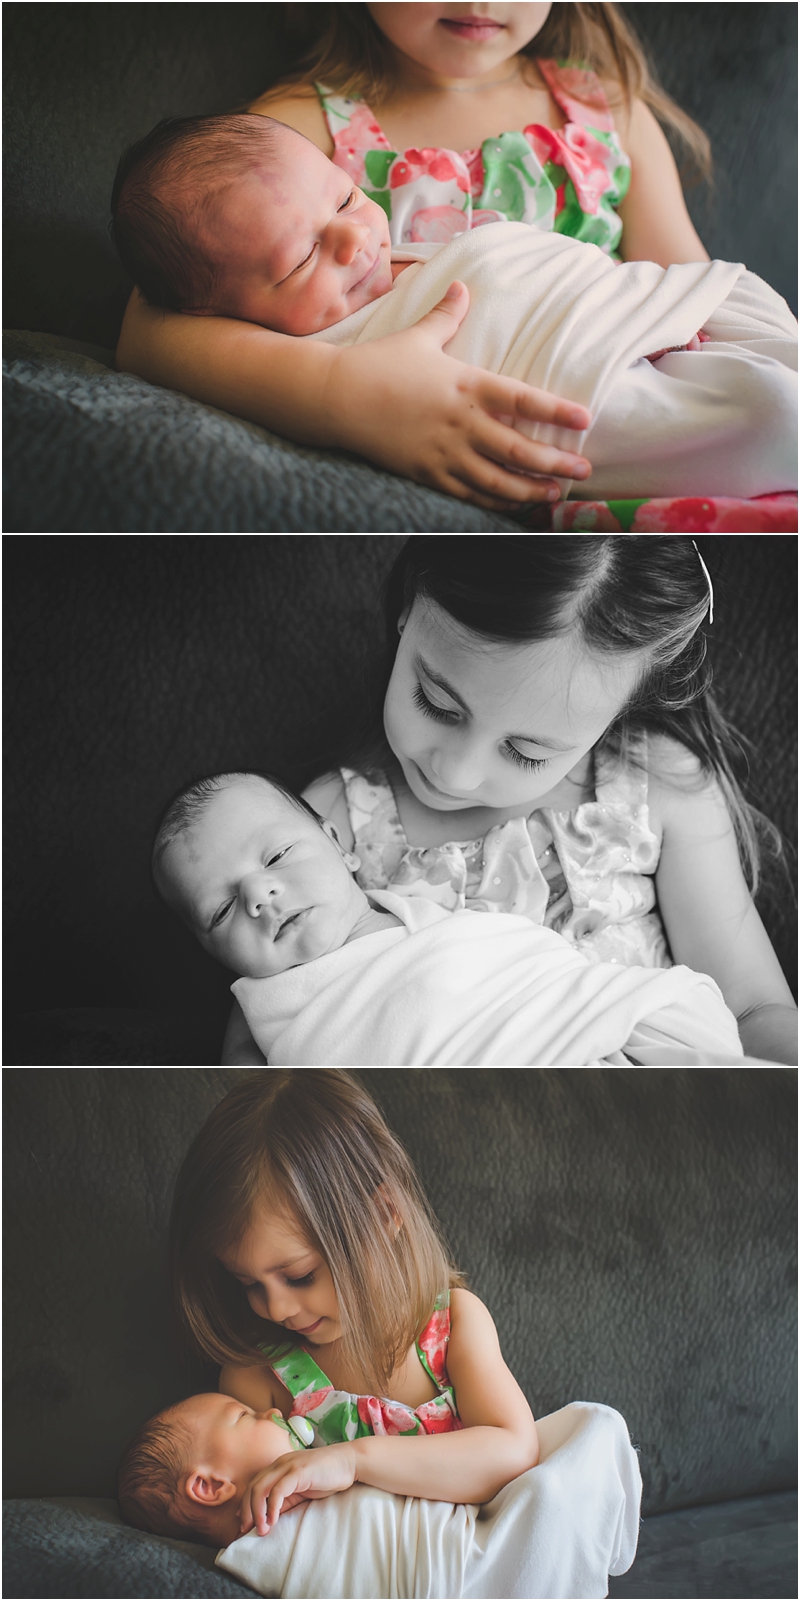 los angeles newborn photos, los angeles newborn photographer, los angeles baby photos, los angeles family photos